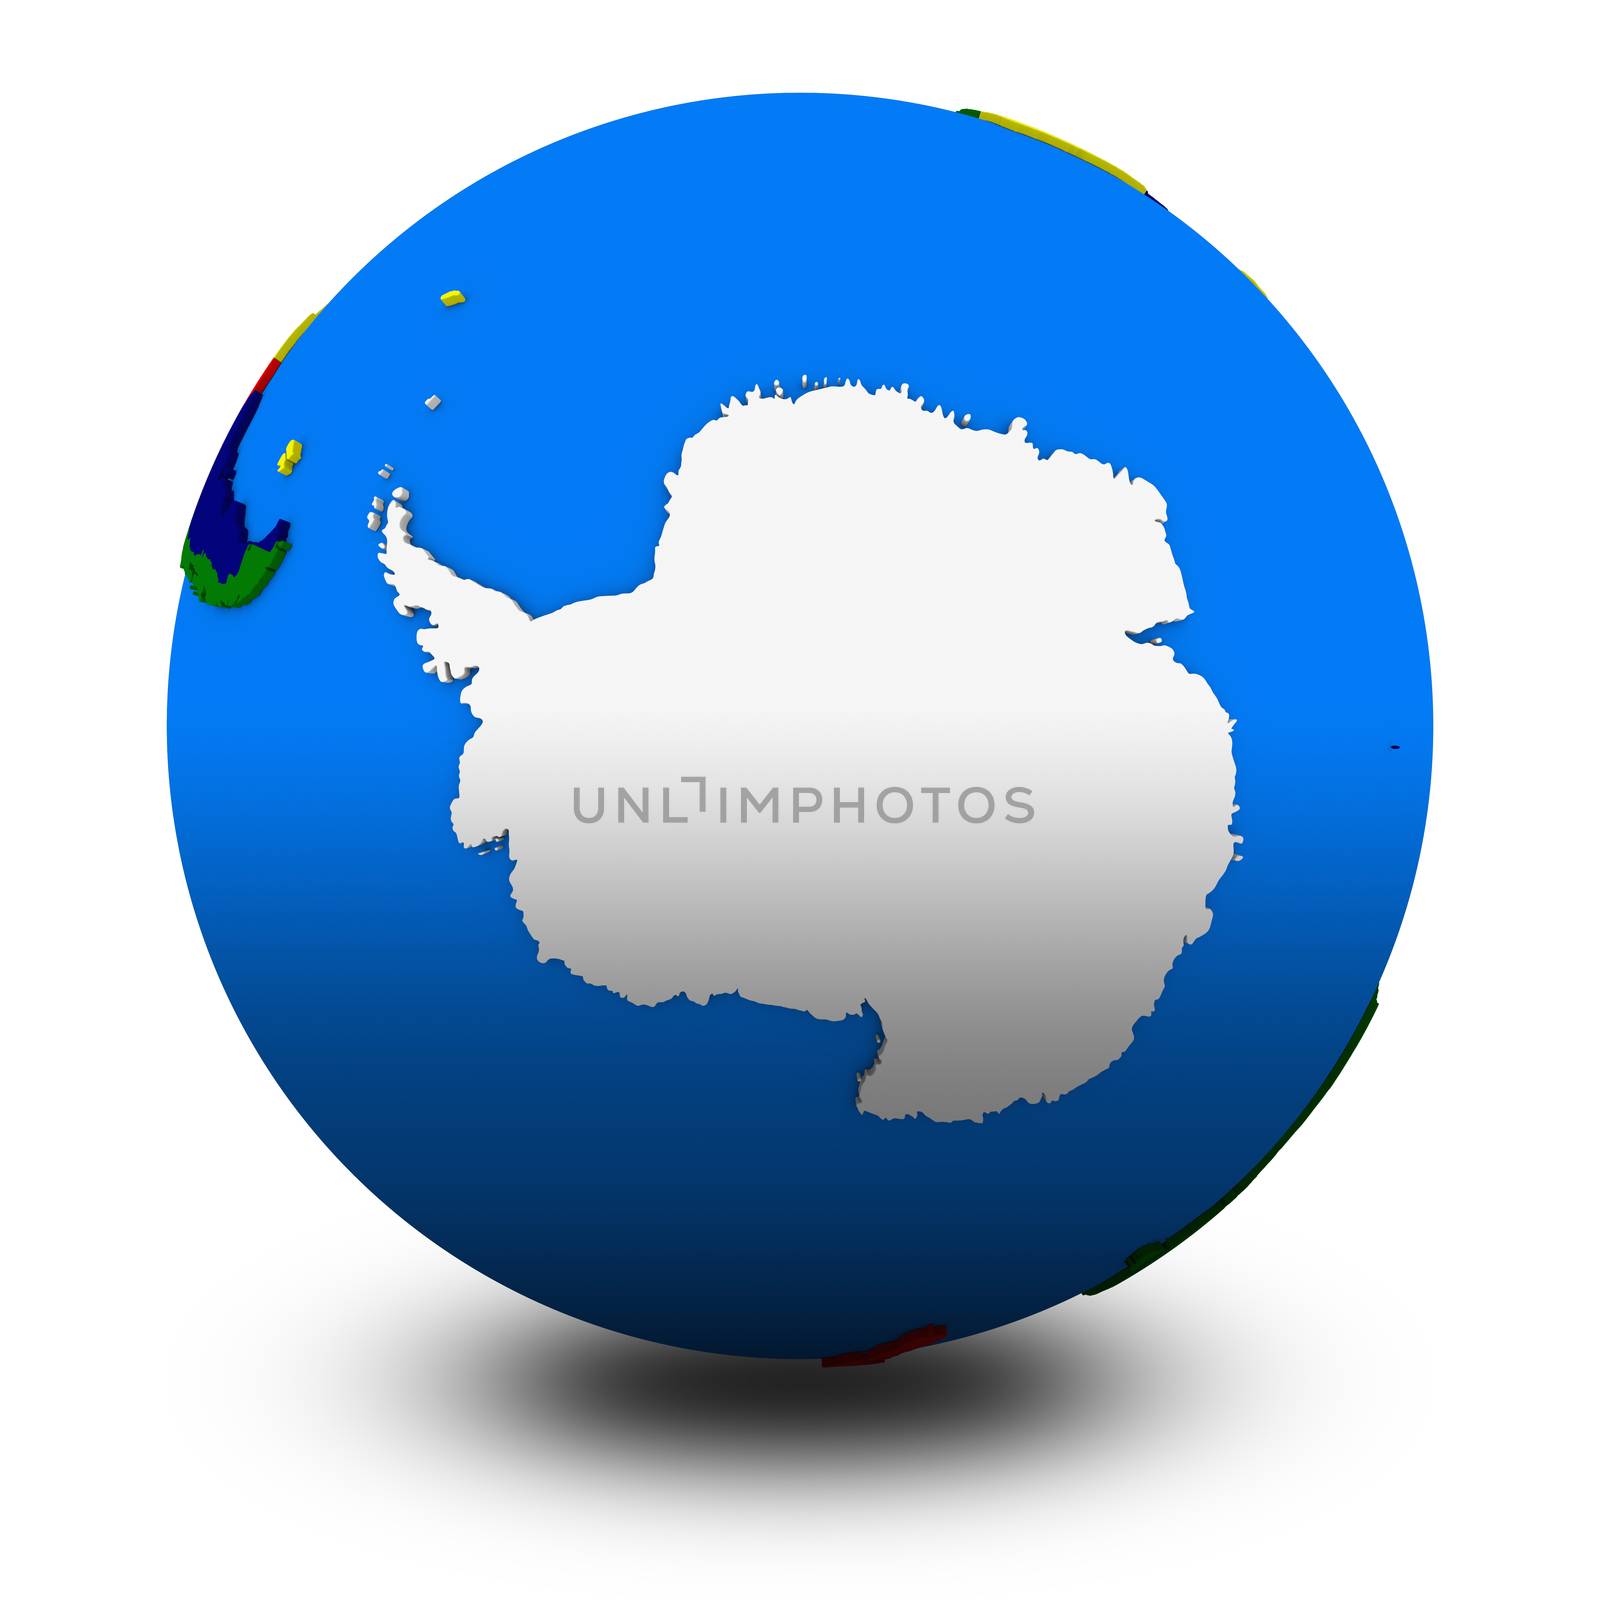 Antarctica on political globe illustration by Harvepino